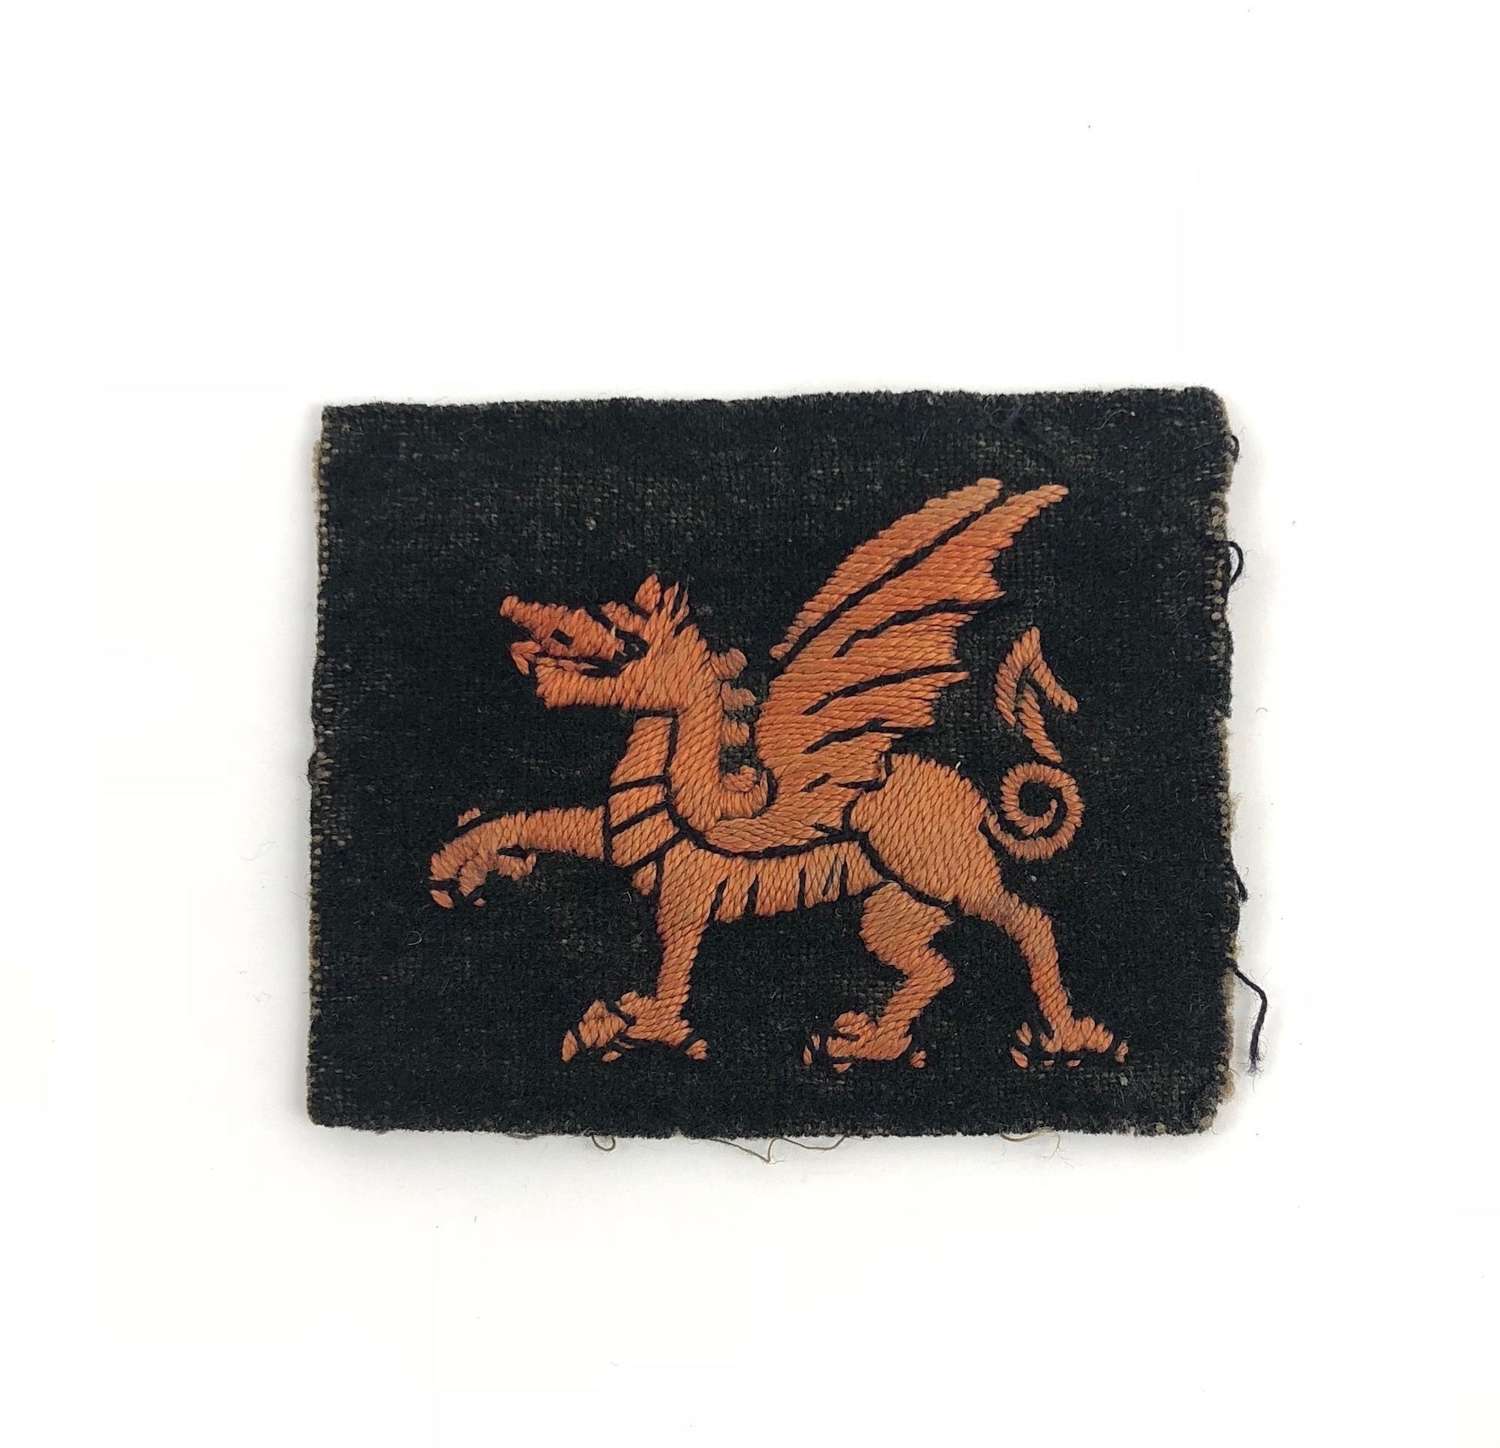 WW1 38th Welsh Division Original Cloth Badge.